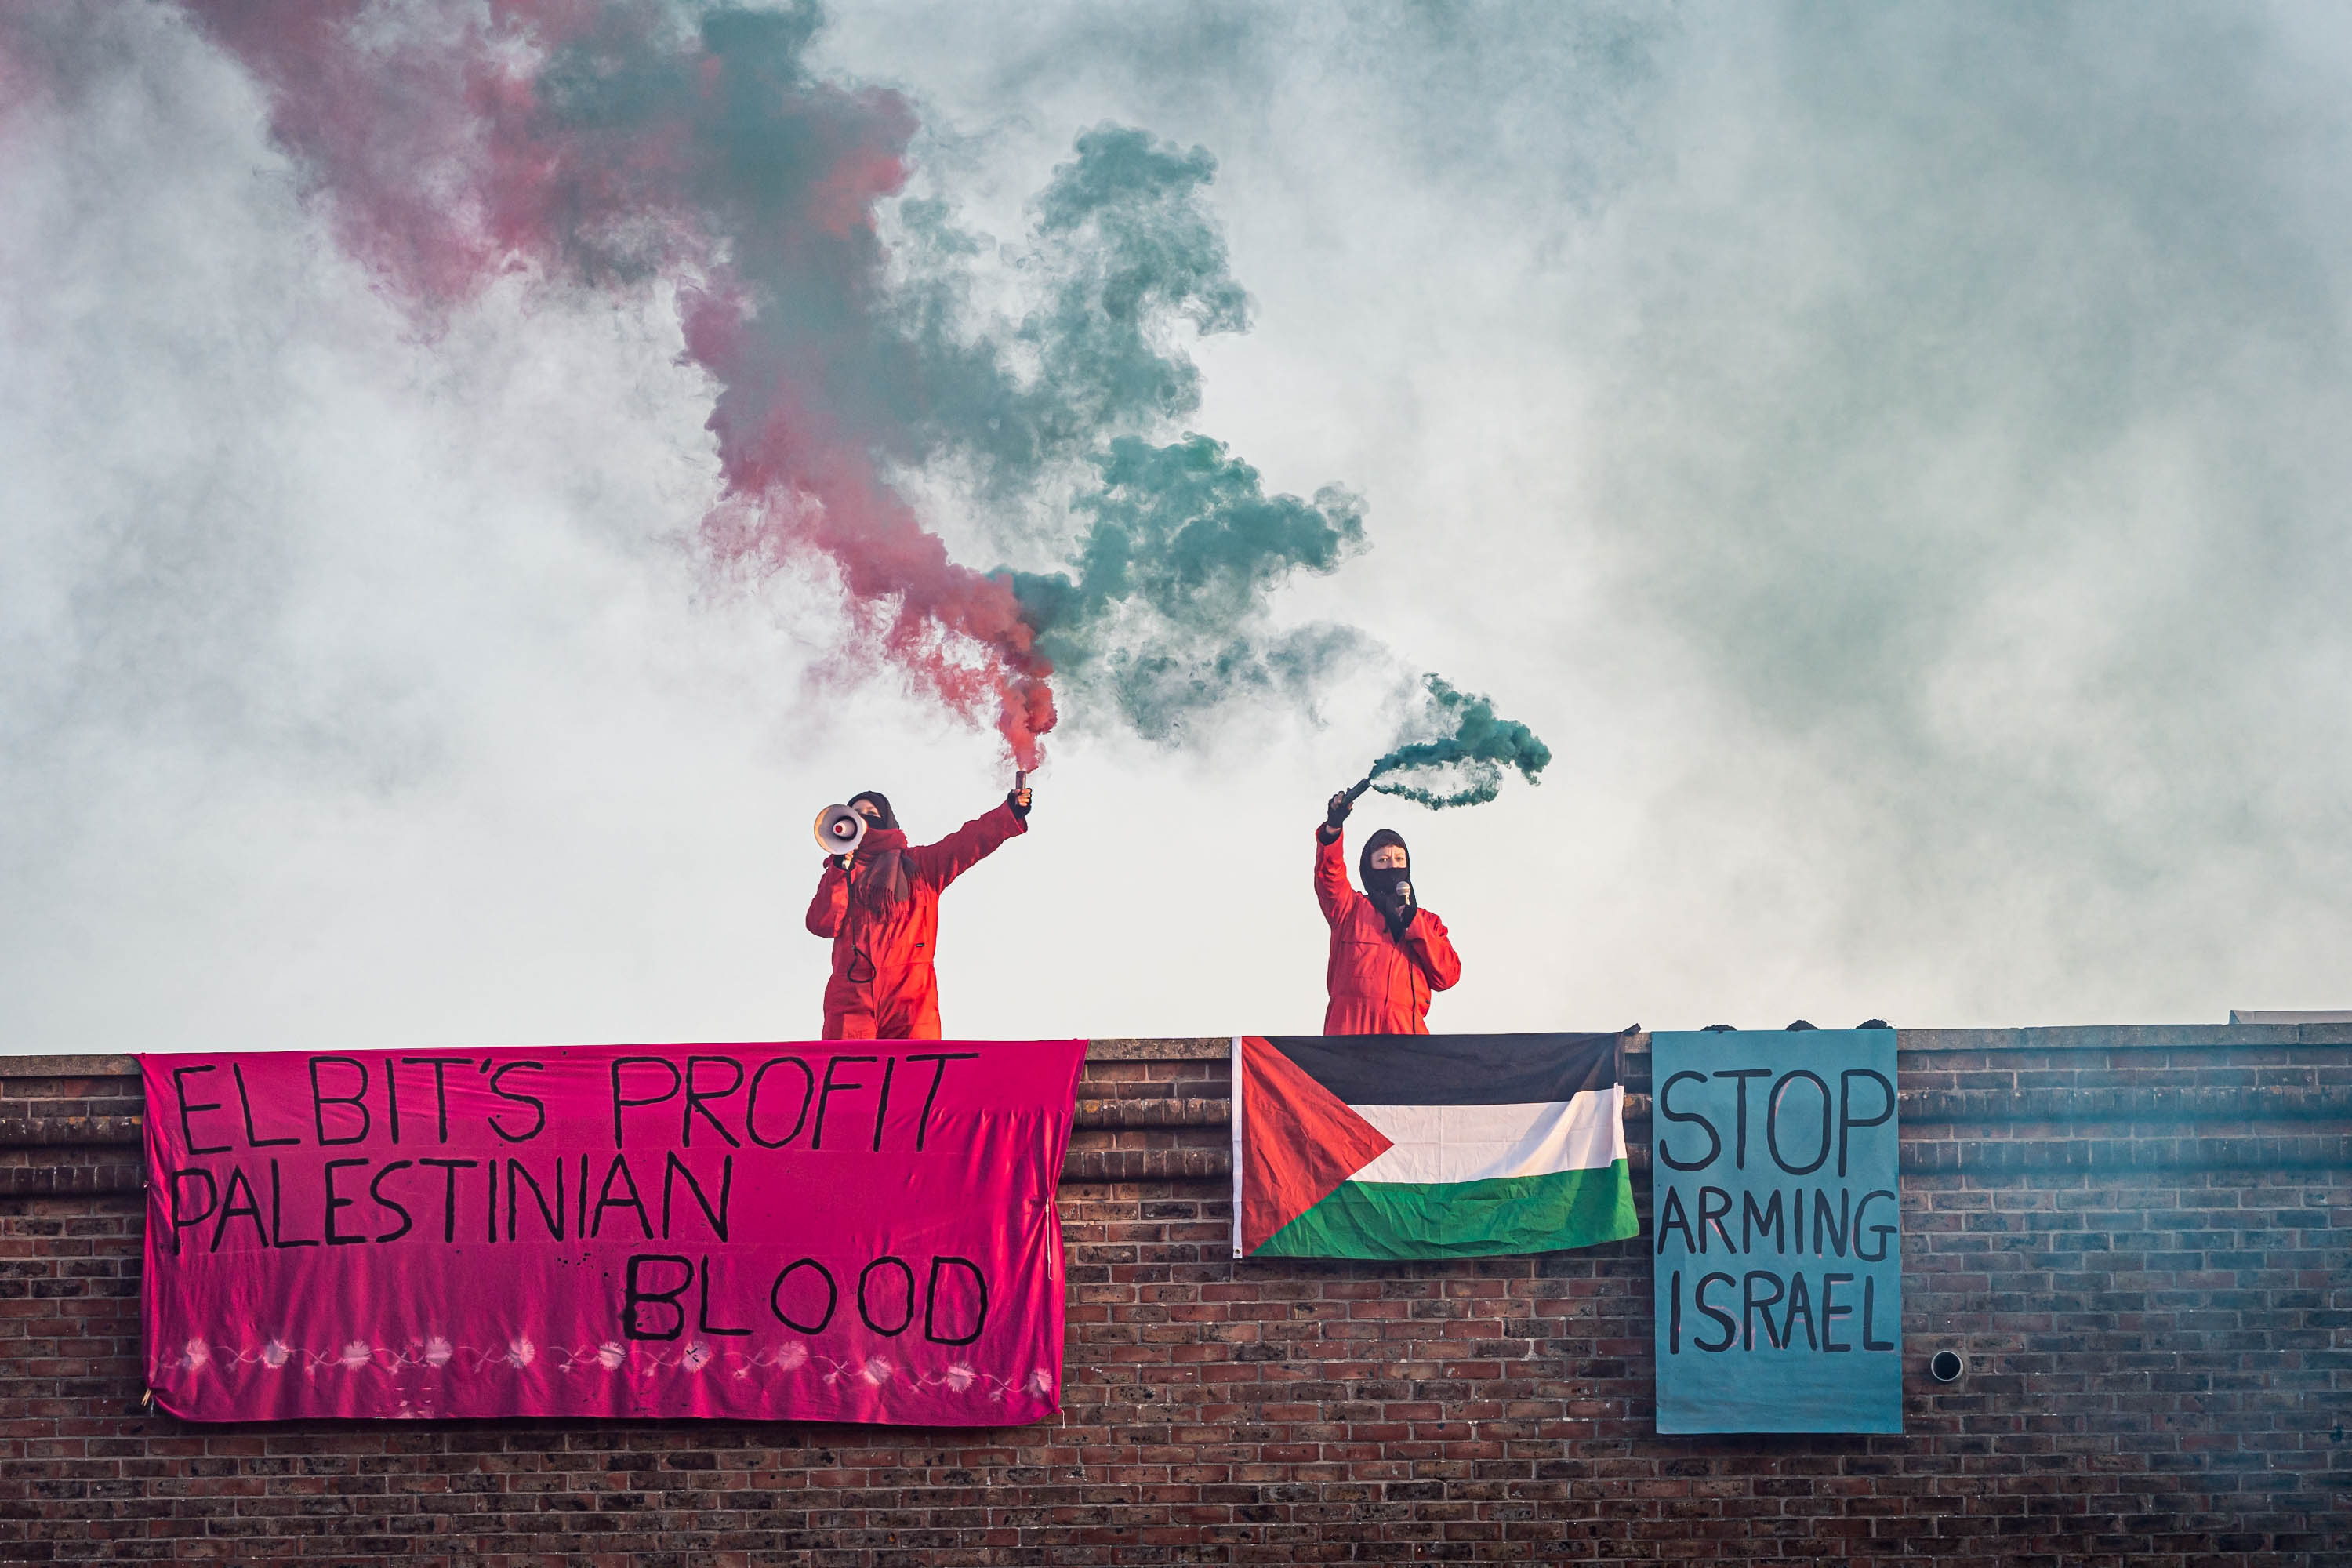 Palestine Action protest in Bristol